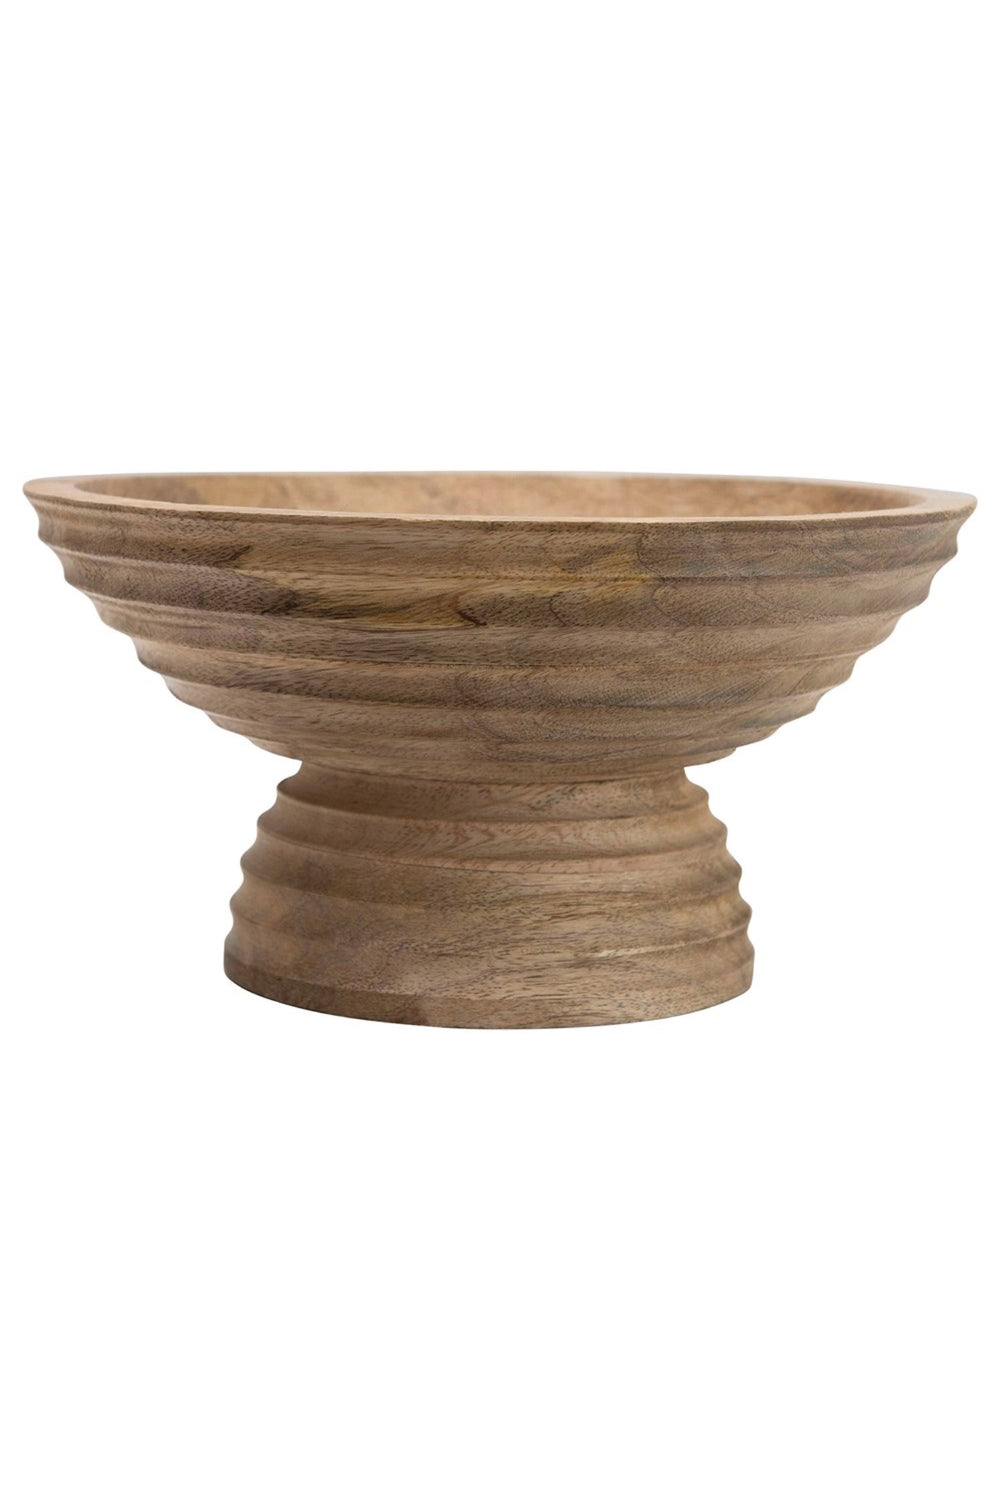 Mango Wood Pedestal Bowl